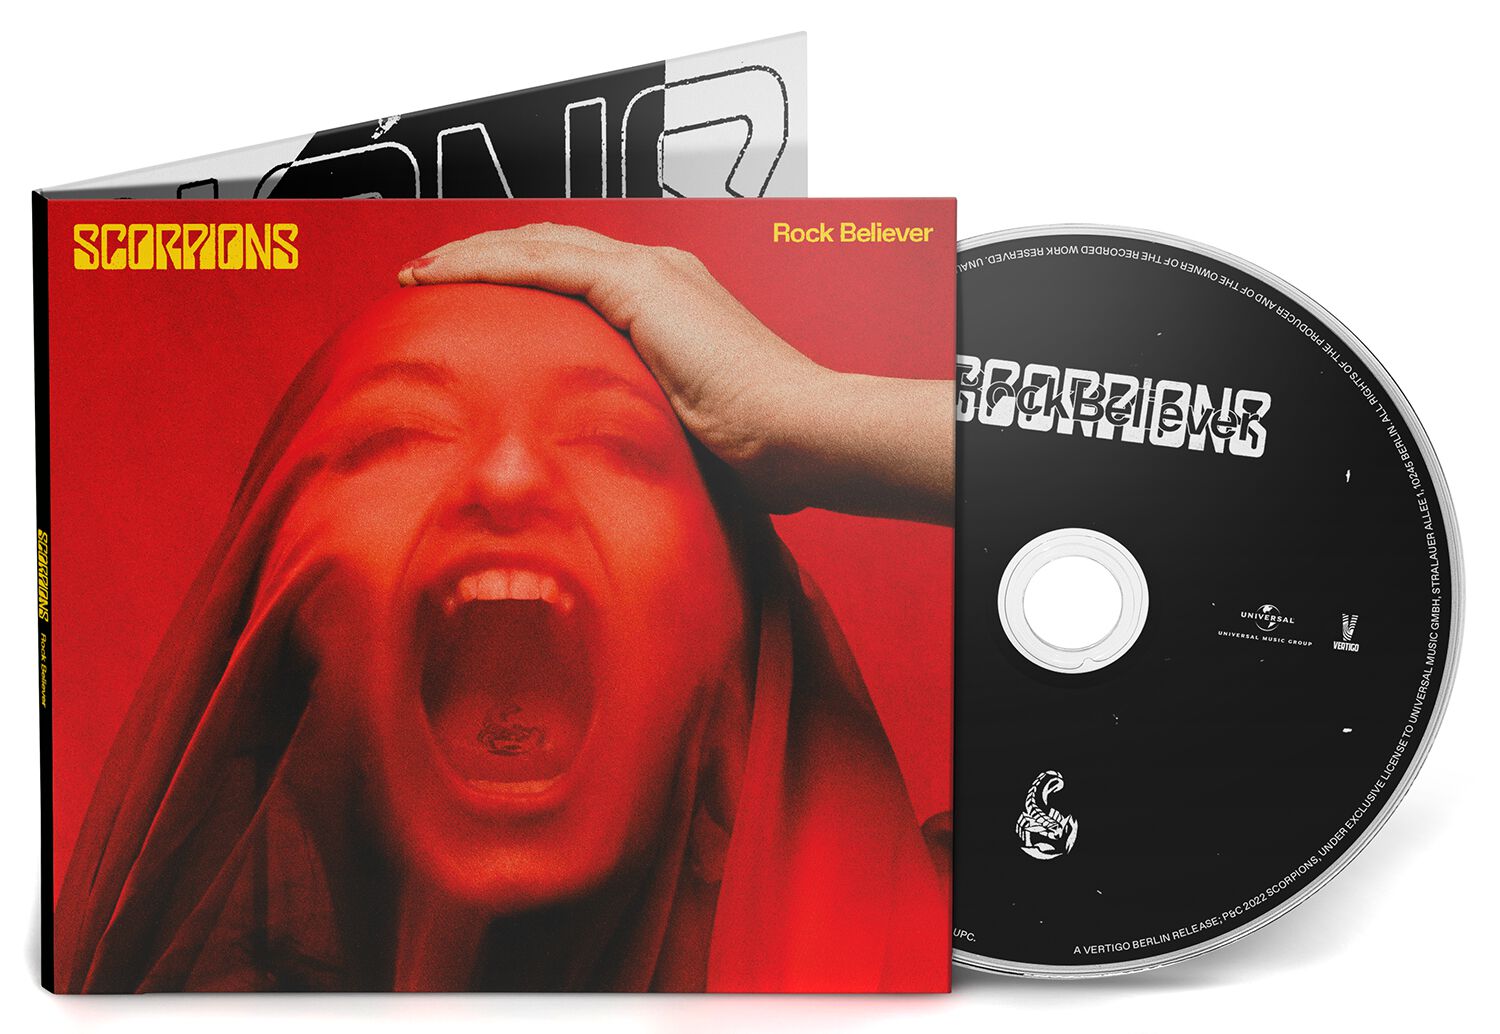 Rock Believer | Scorpions CD | EMP